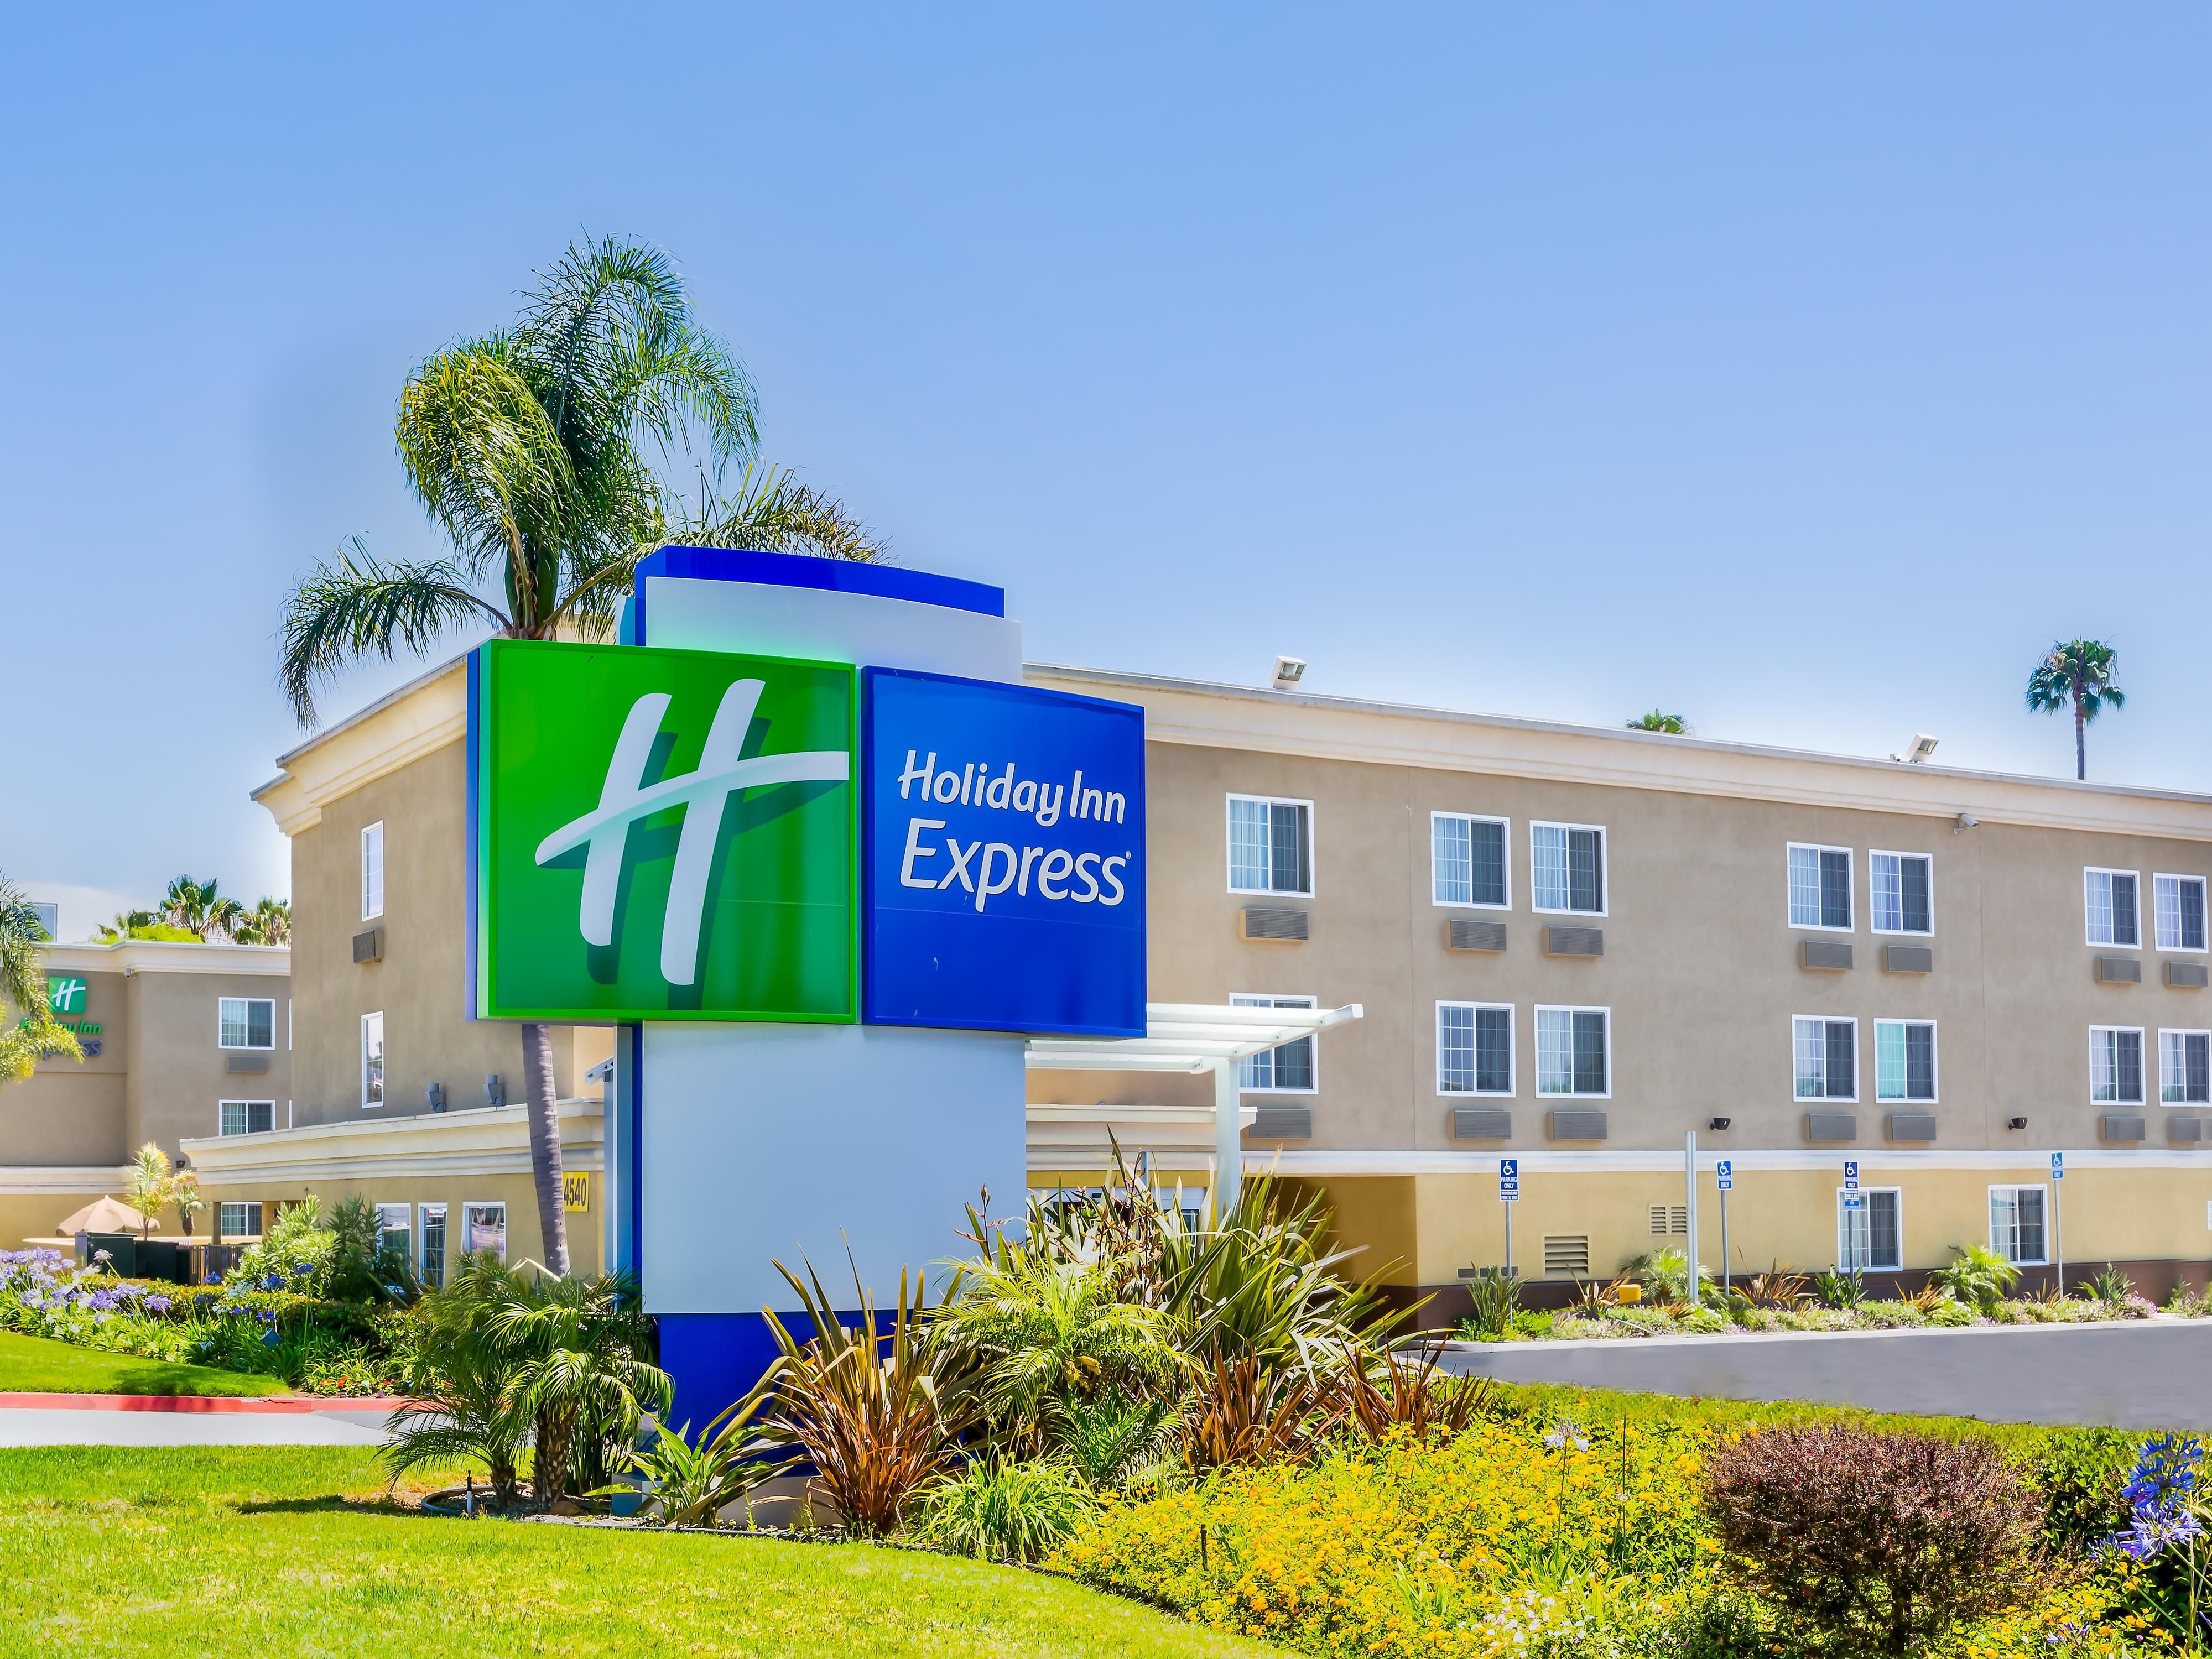 Holiday Inn Express San Diego 2954837658 4x3